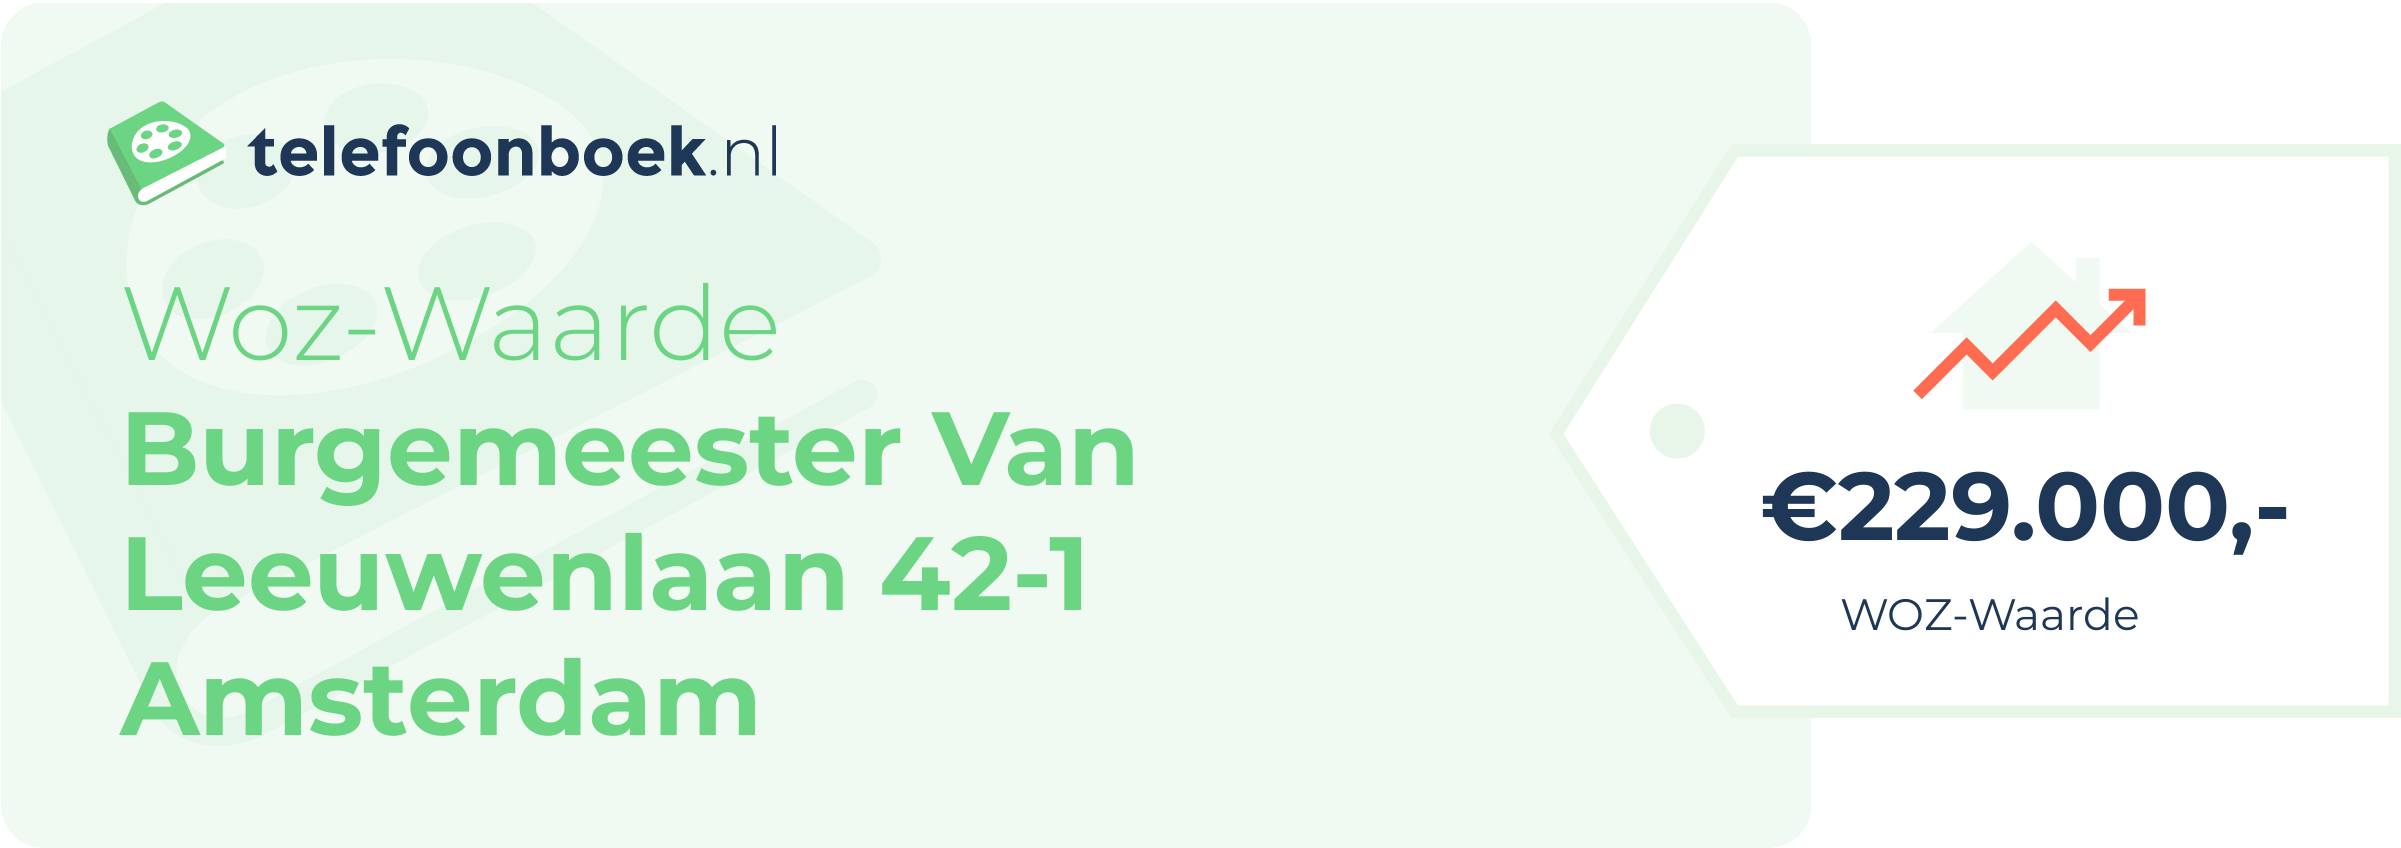 WOZ-waarde Burgemeester Van Leeuwenlaan 42-1 Amsterdam